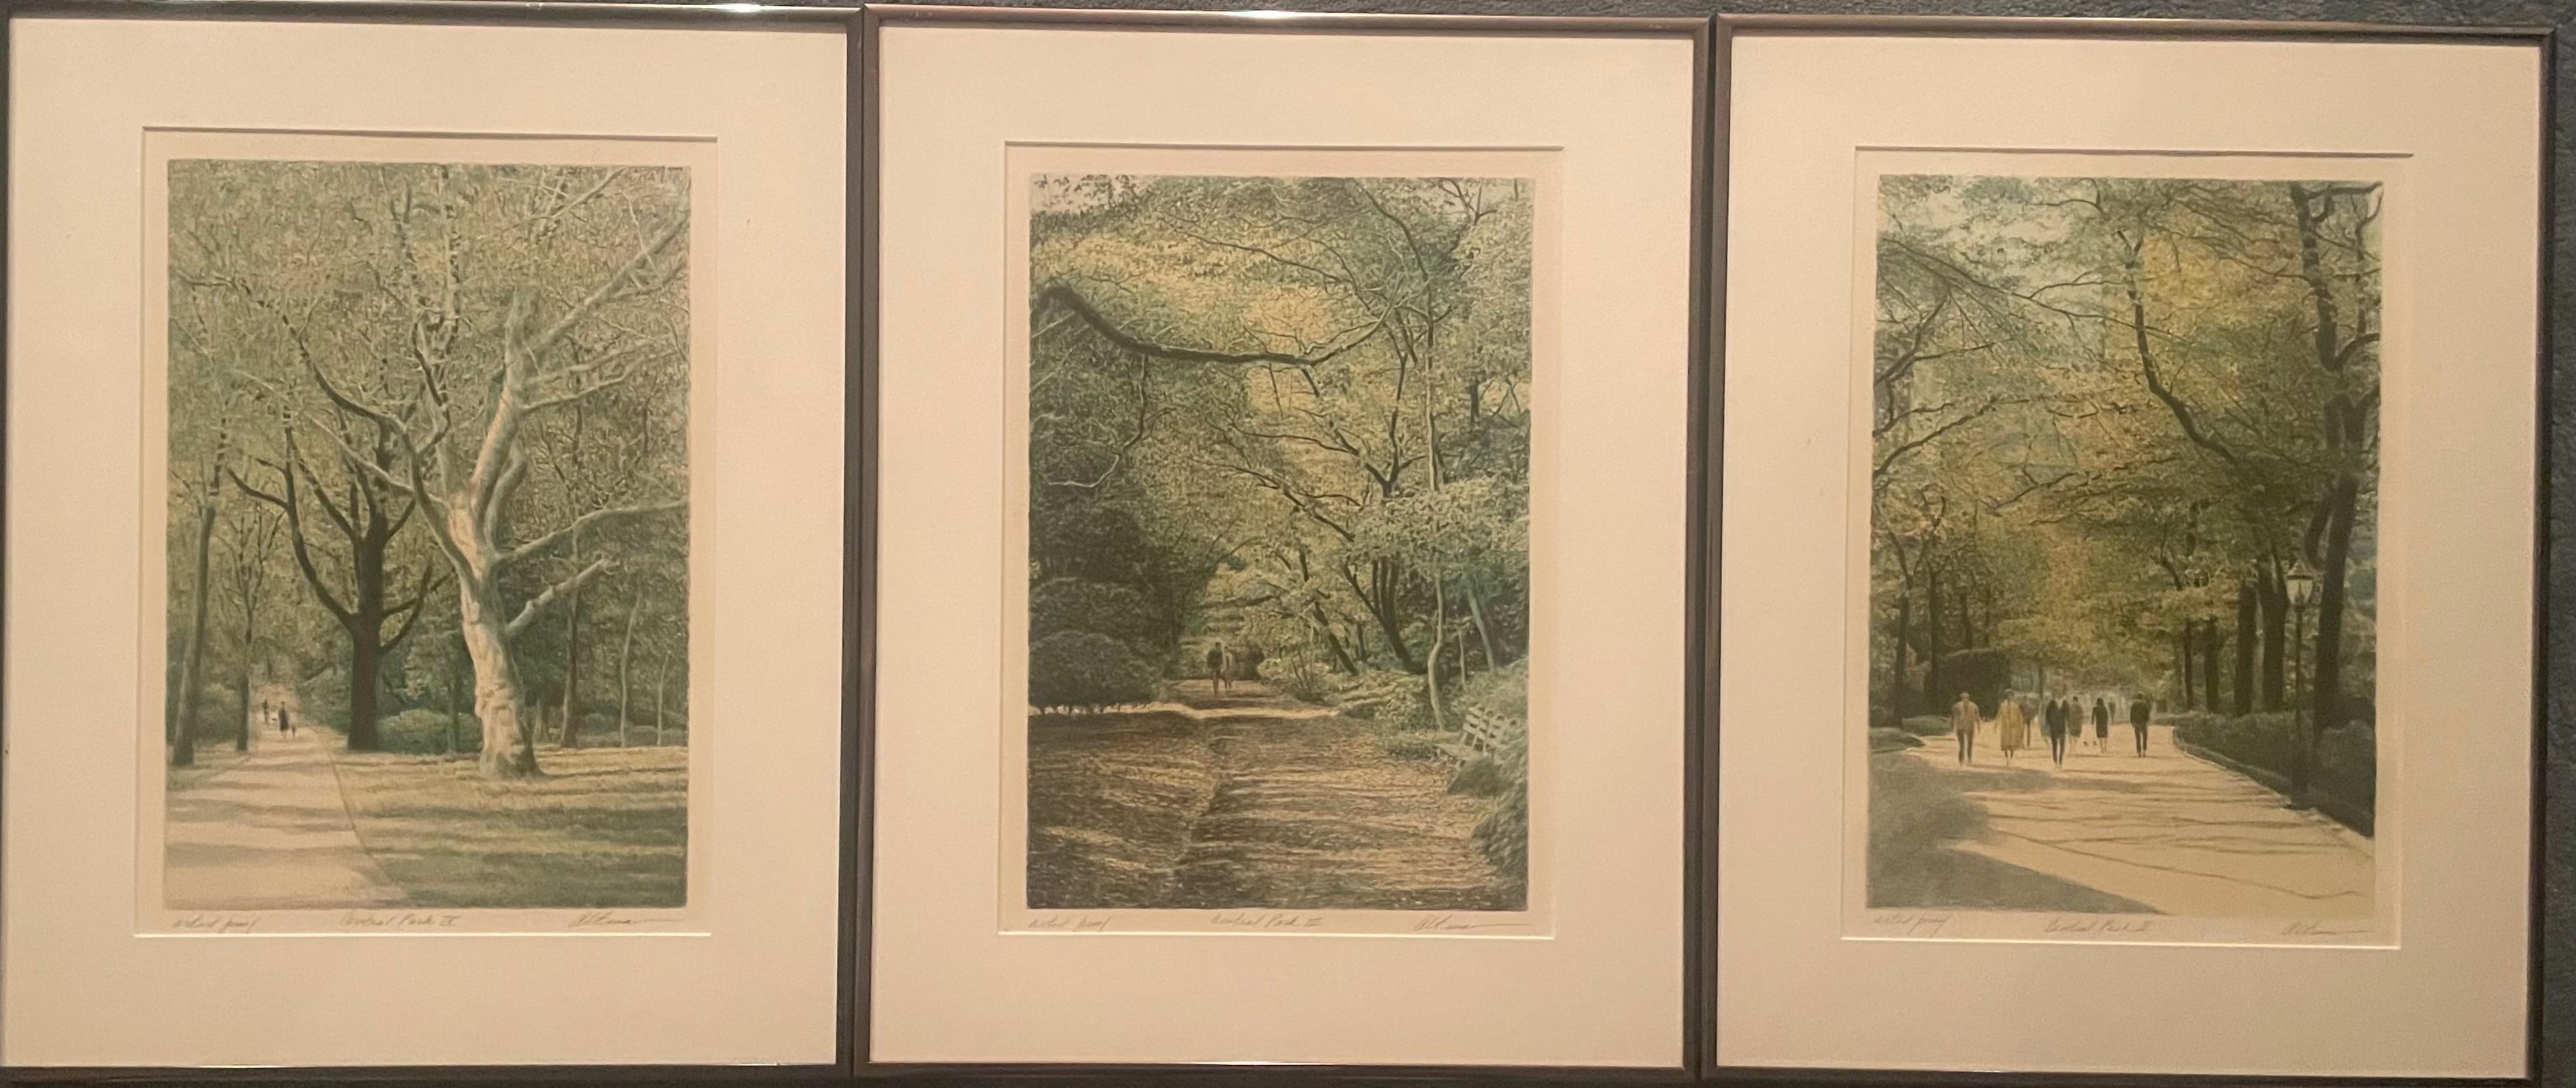 "Central Park ii, iii, iv" - Print by Harold Altman